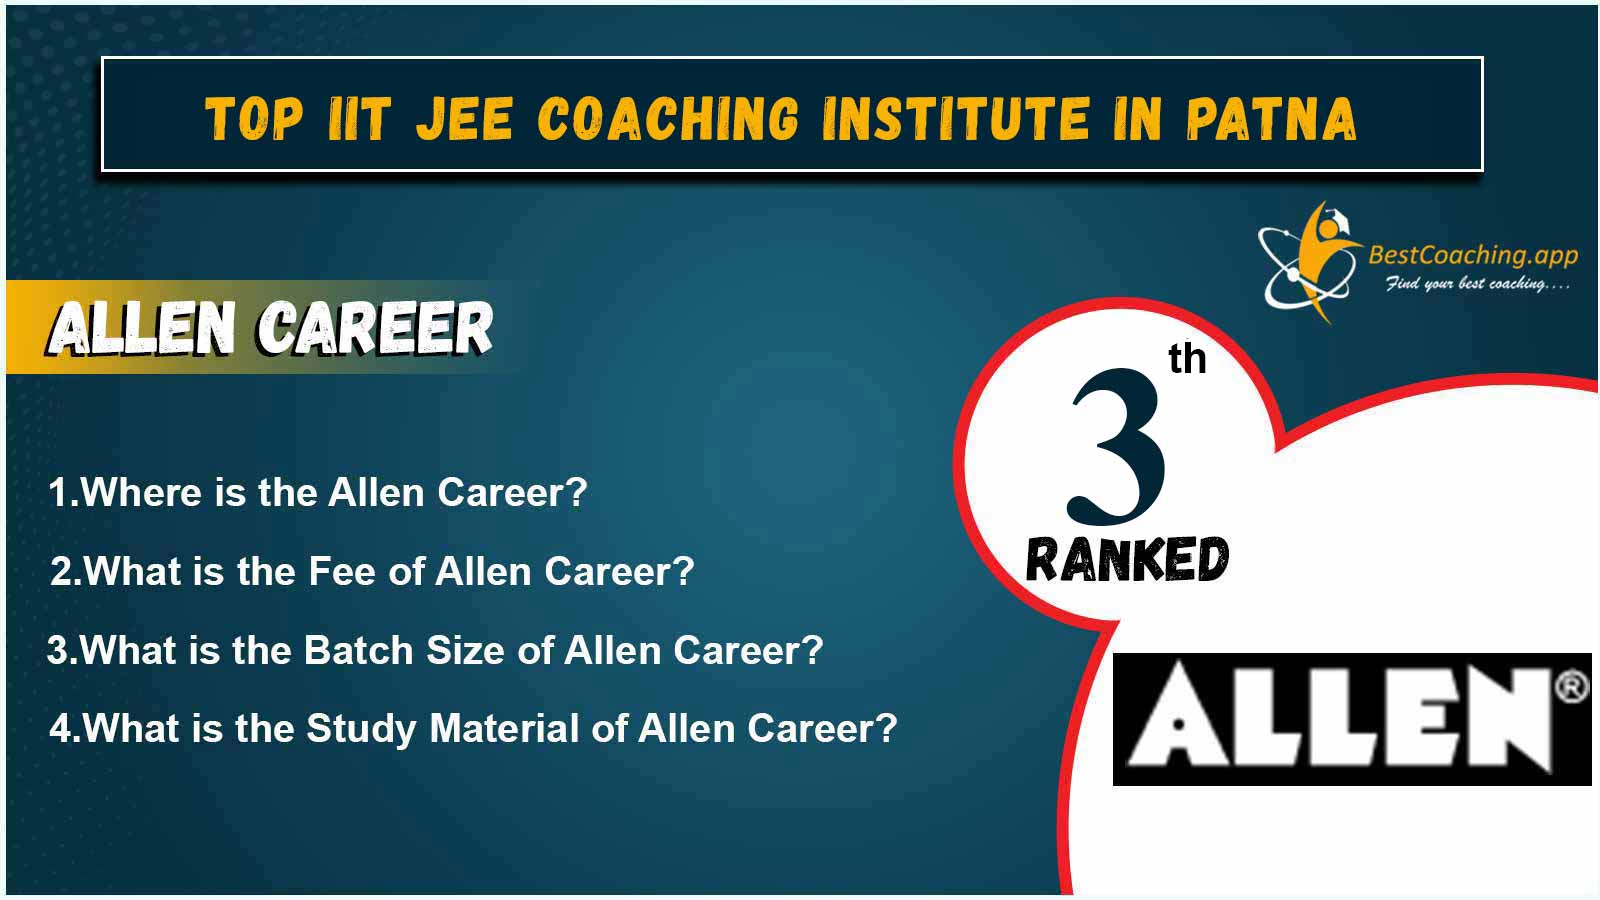 IIT JEE Coaching institute of Patna